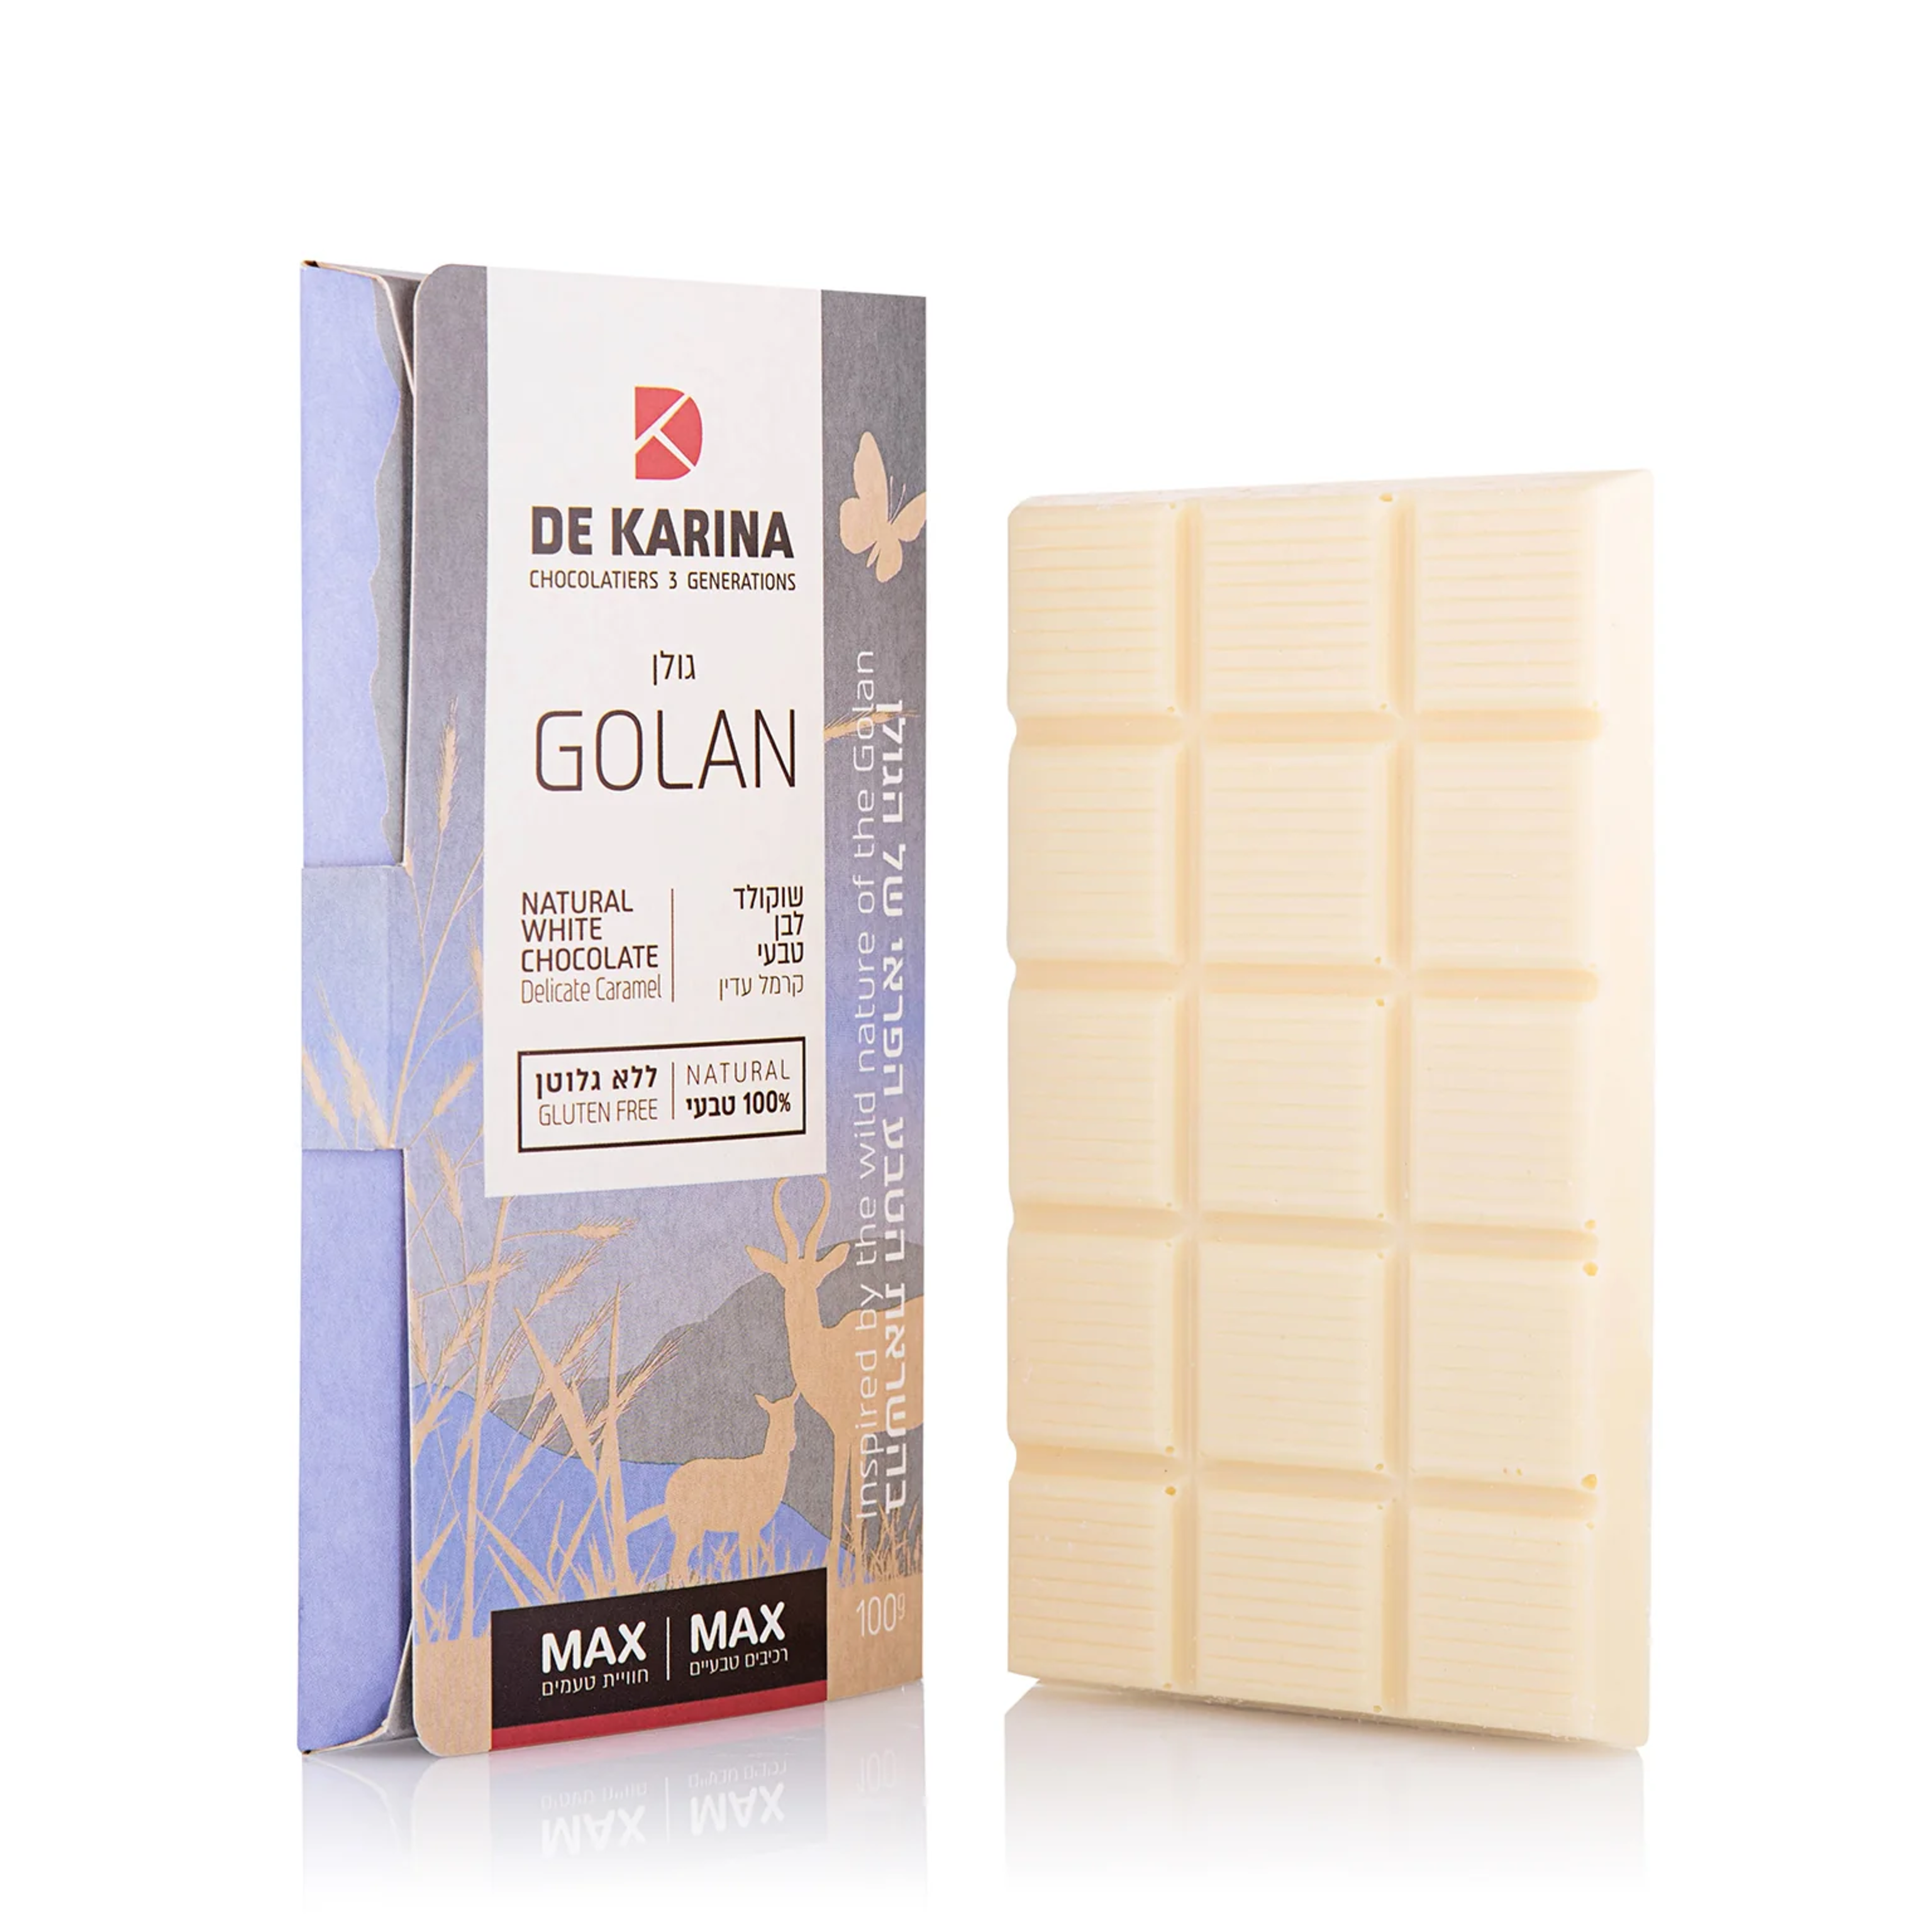 De Karina - White chocolate bar with delicate caramel - Golan